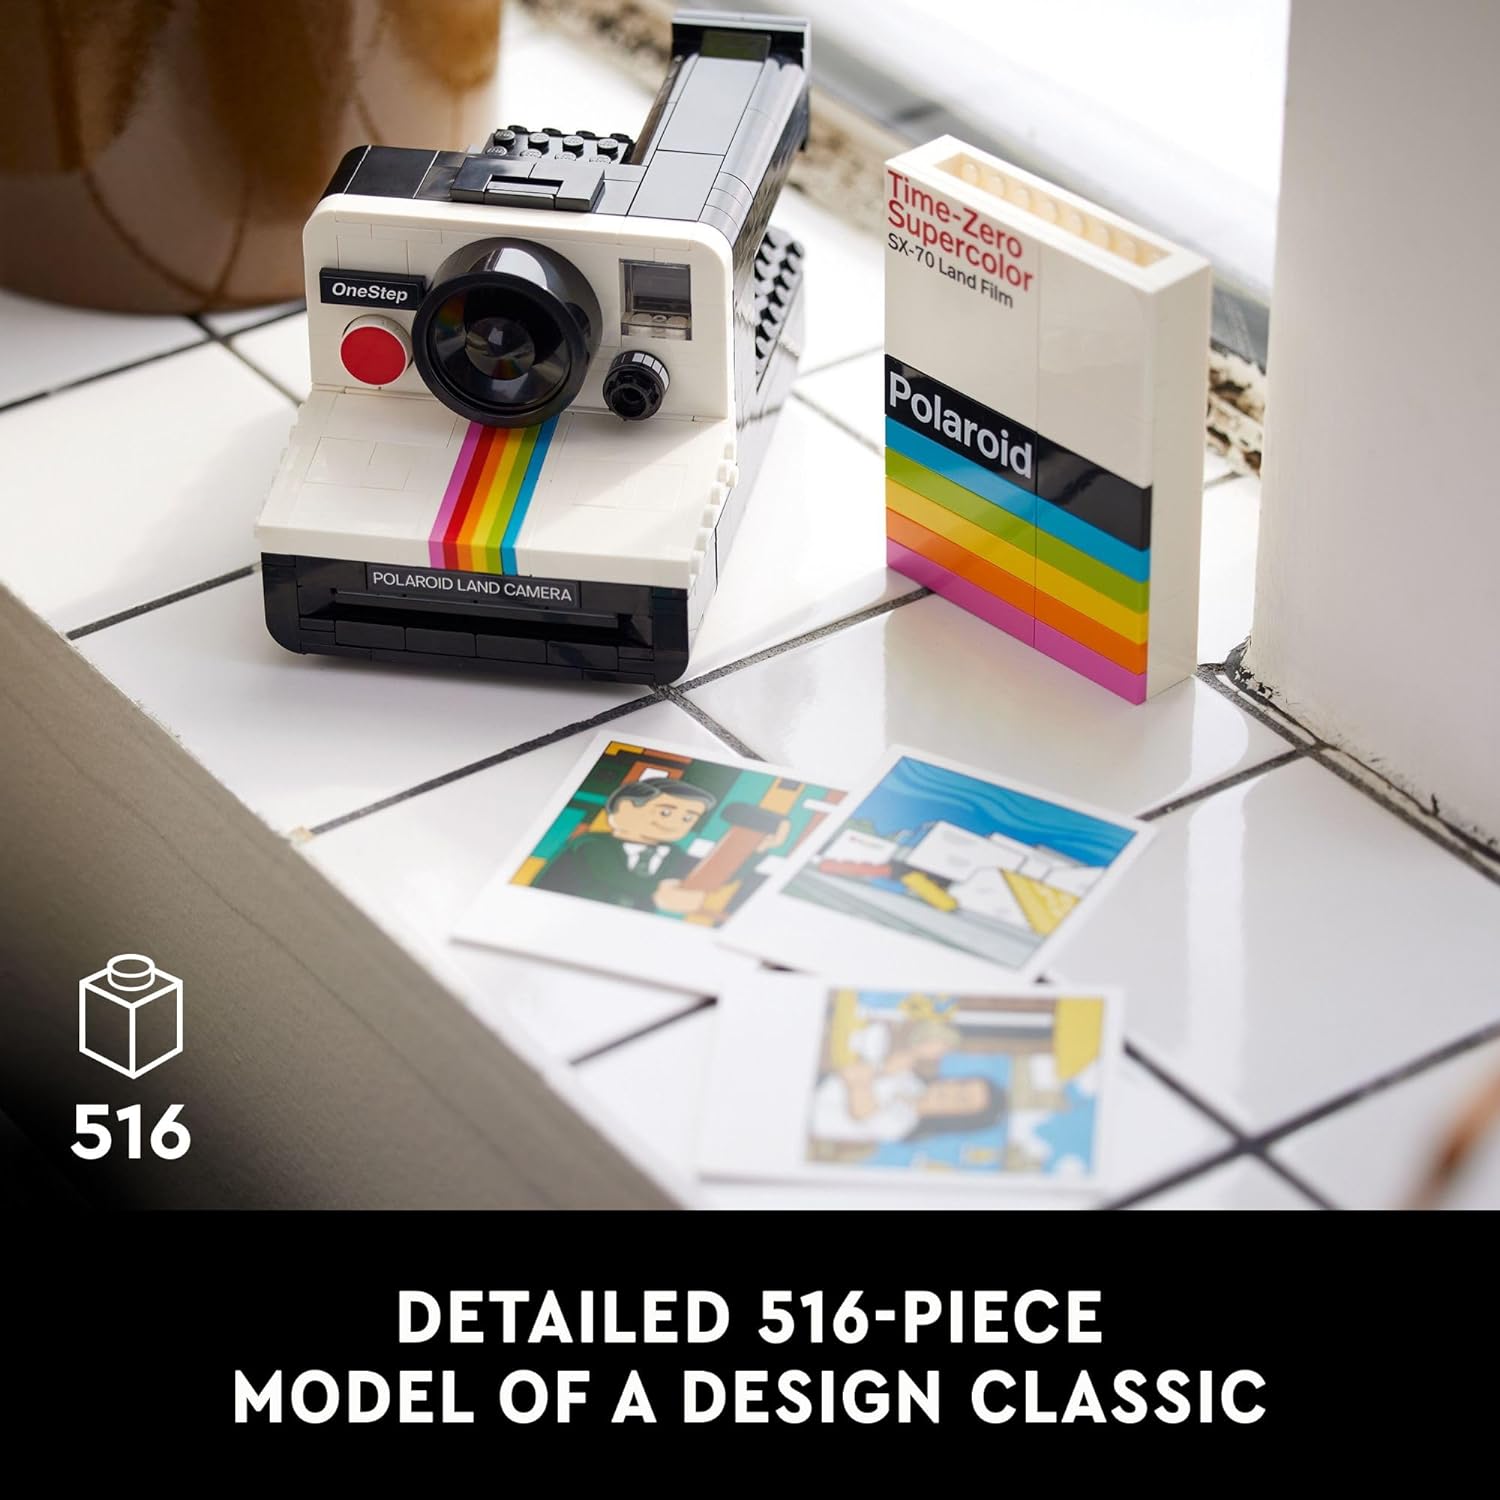 LEGO 21345 Ideas Polaroid OneStep SX-70 Camera Building Kit, Creative Gift for Photographers, Collectible Brick-Built Vintage Polaroid Camera Model